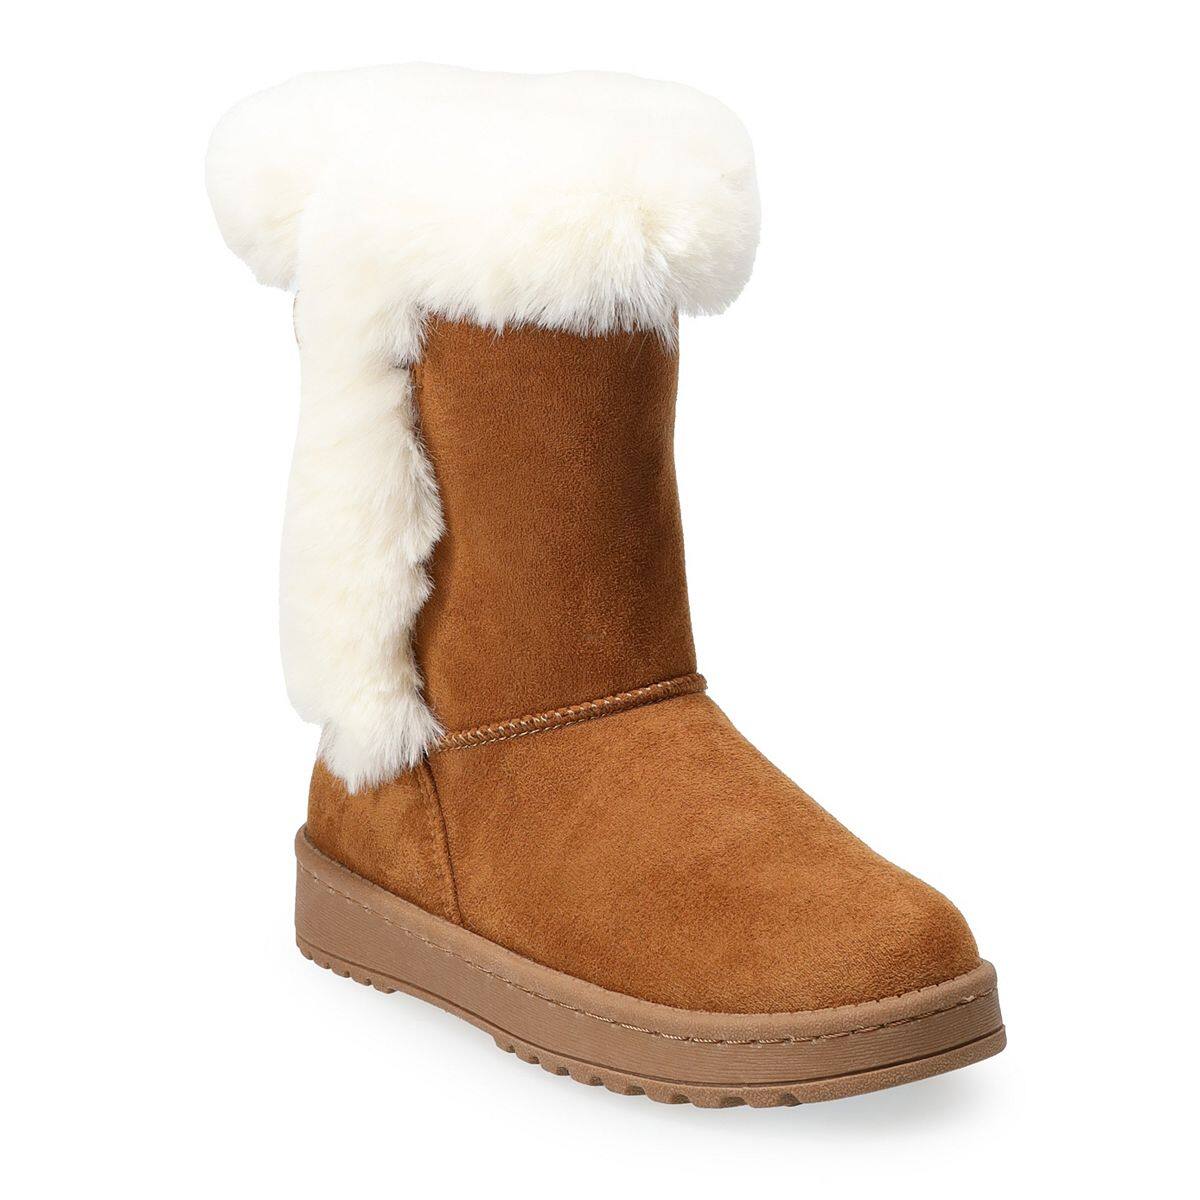 Kohls SO Girls' Ankle, HIking or Winter Boots (various) $12.75 + free store pickup at Kohls